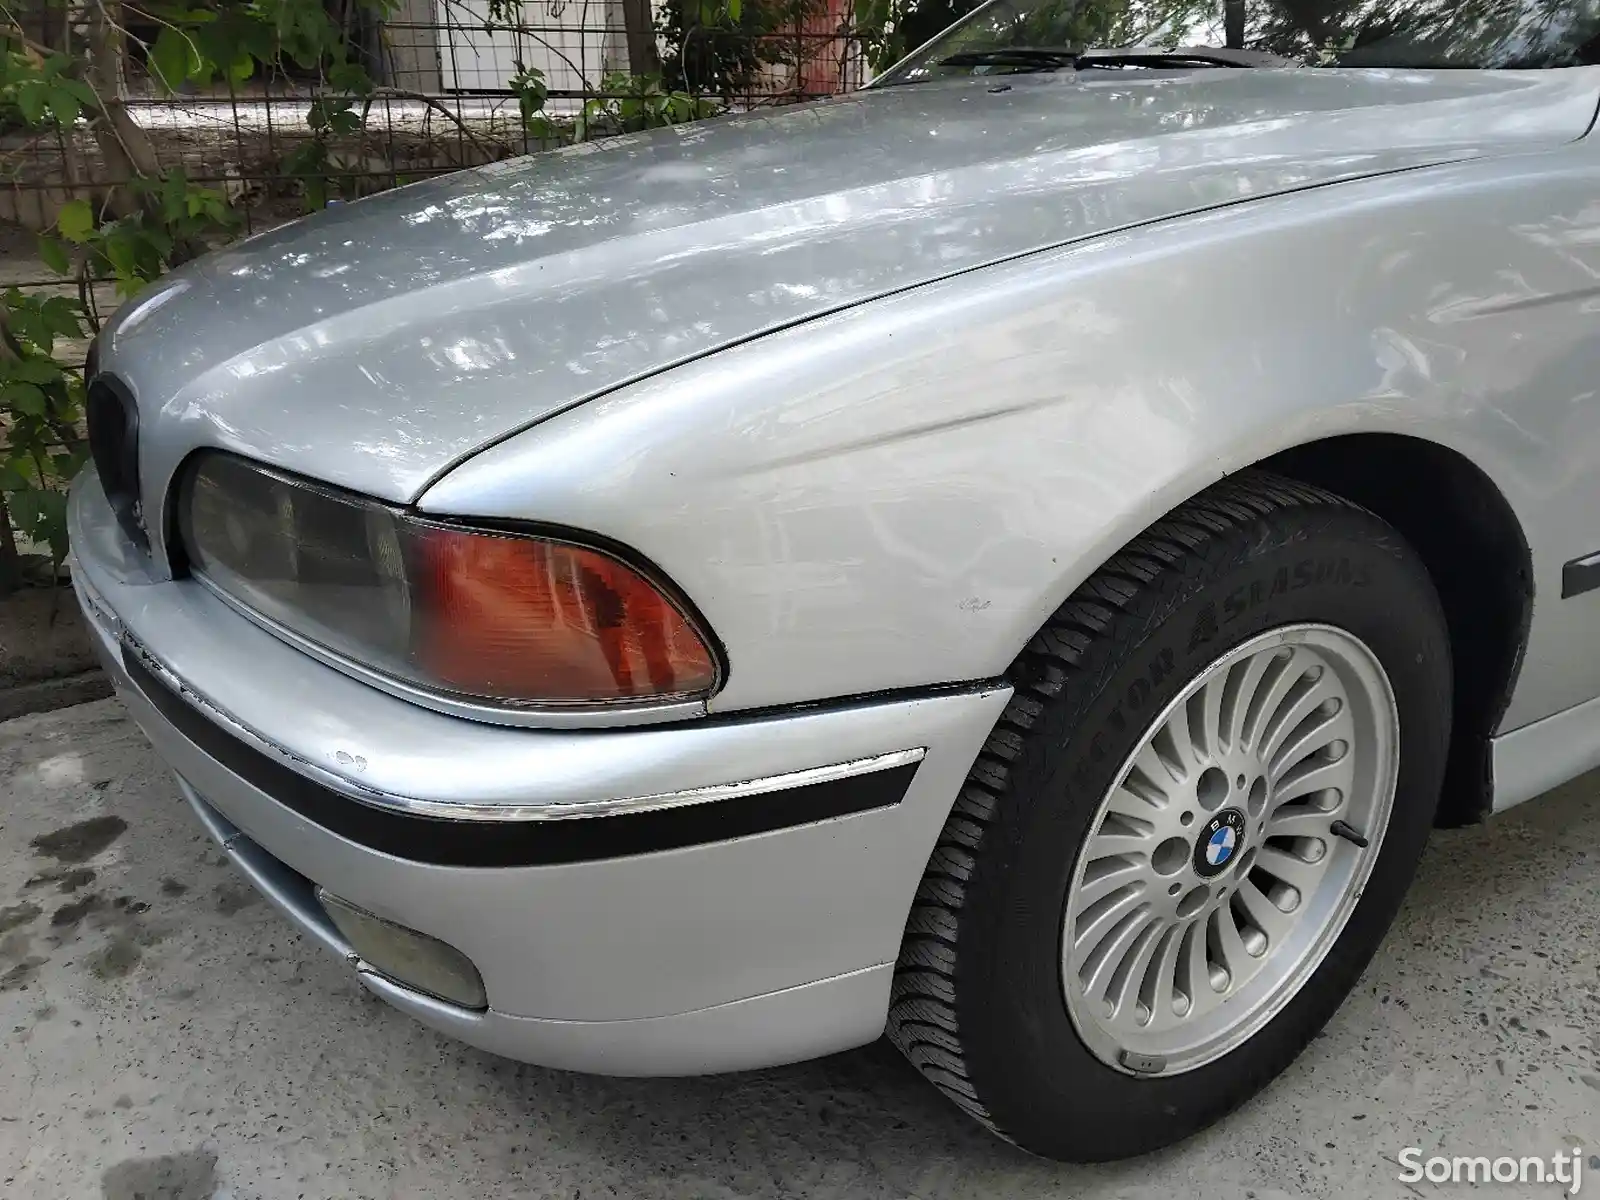 BMW 5 series, 1997-2